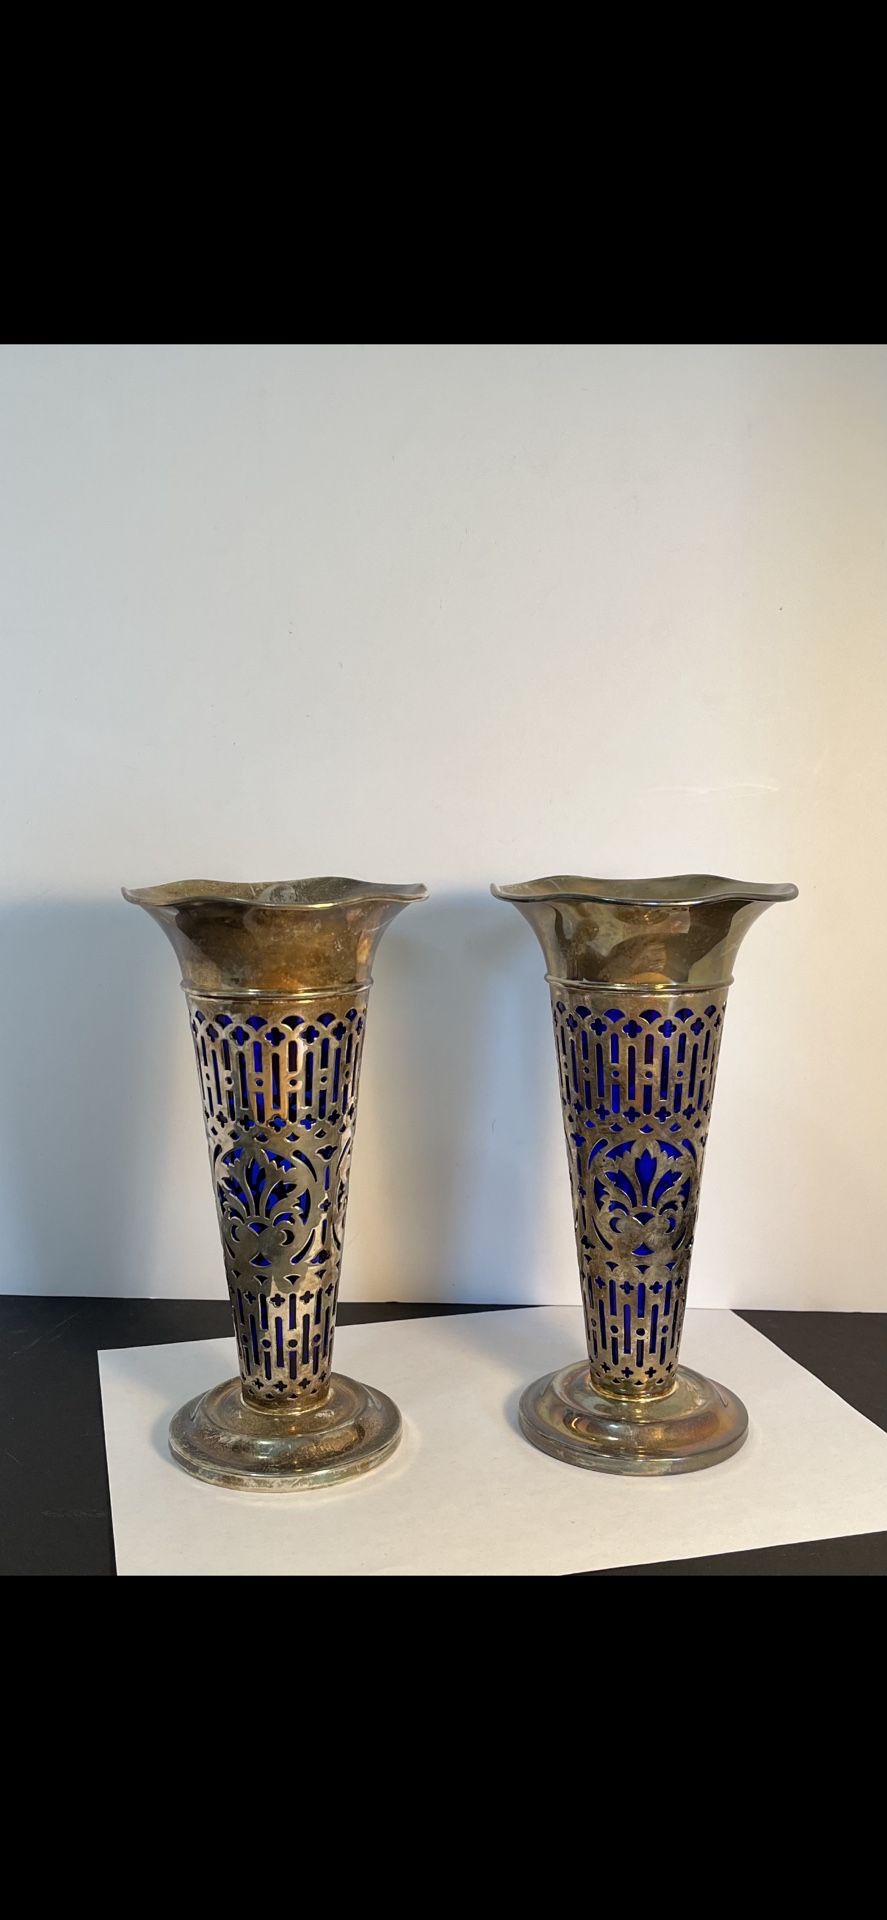 Vintage Godinger Silverplate Vases with Colbalt Blue Glass Inserts